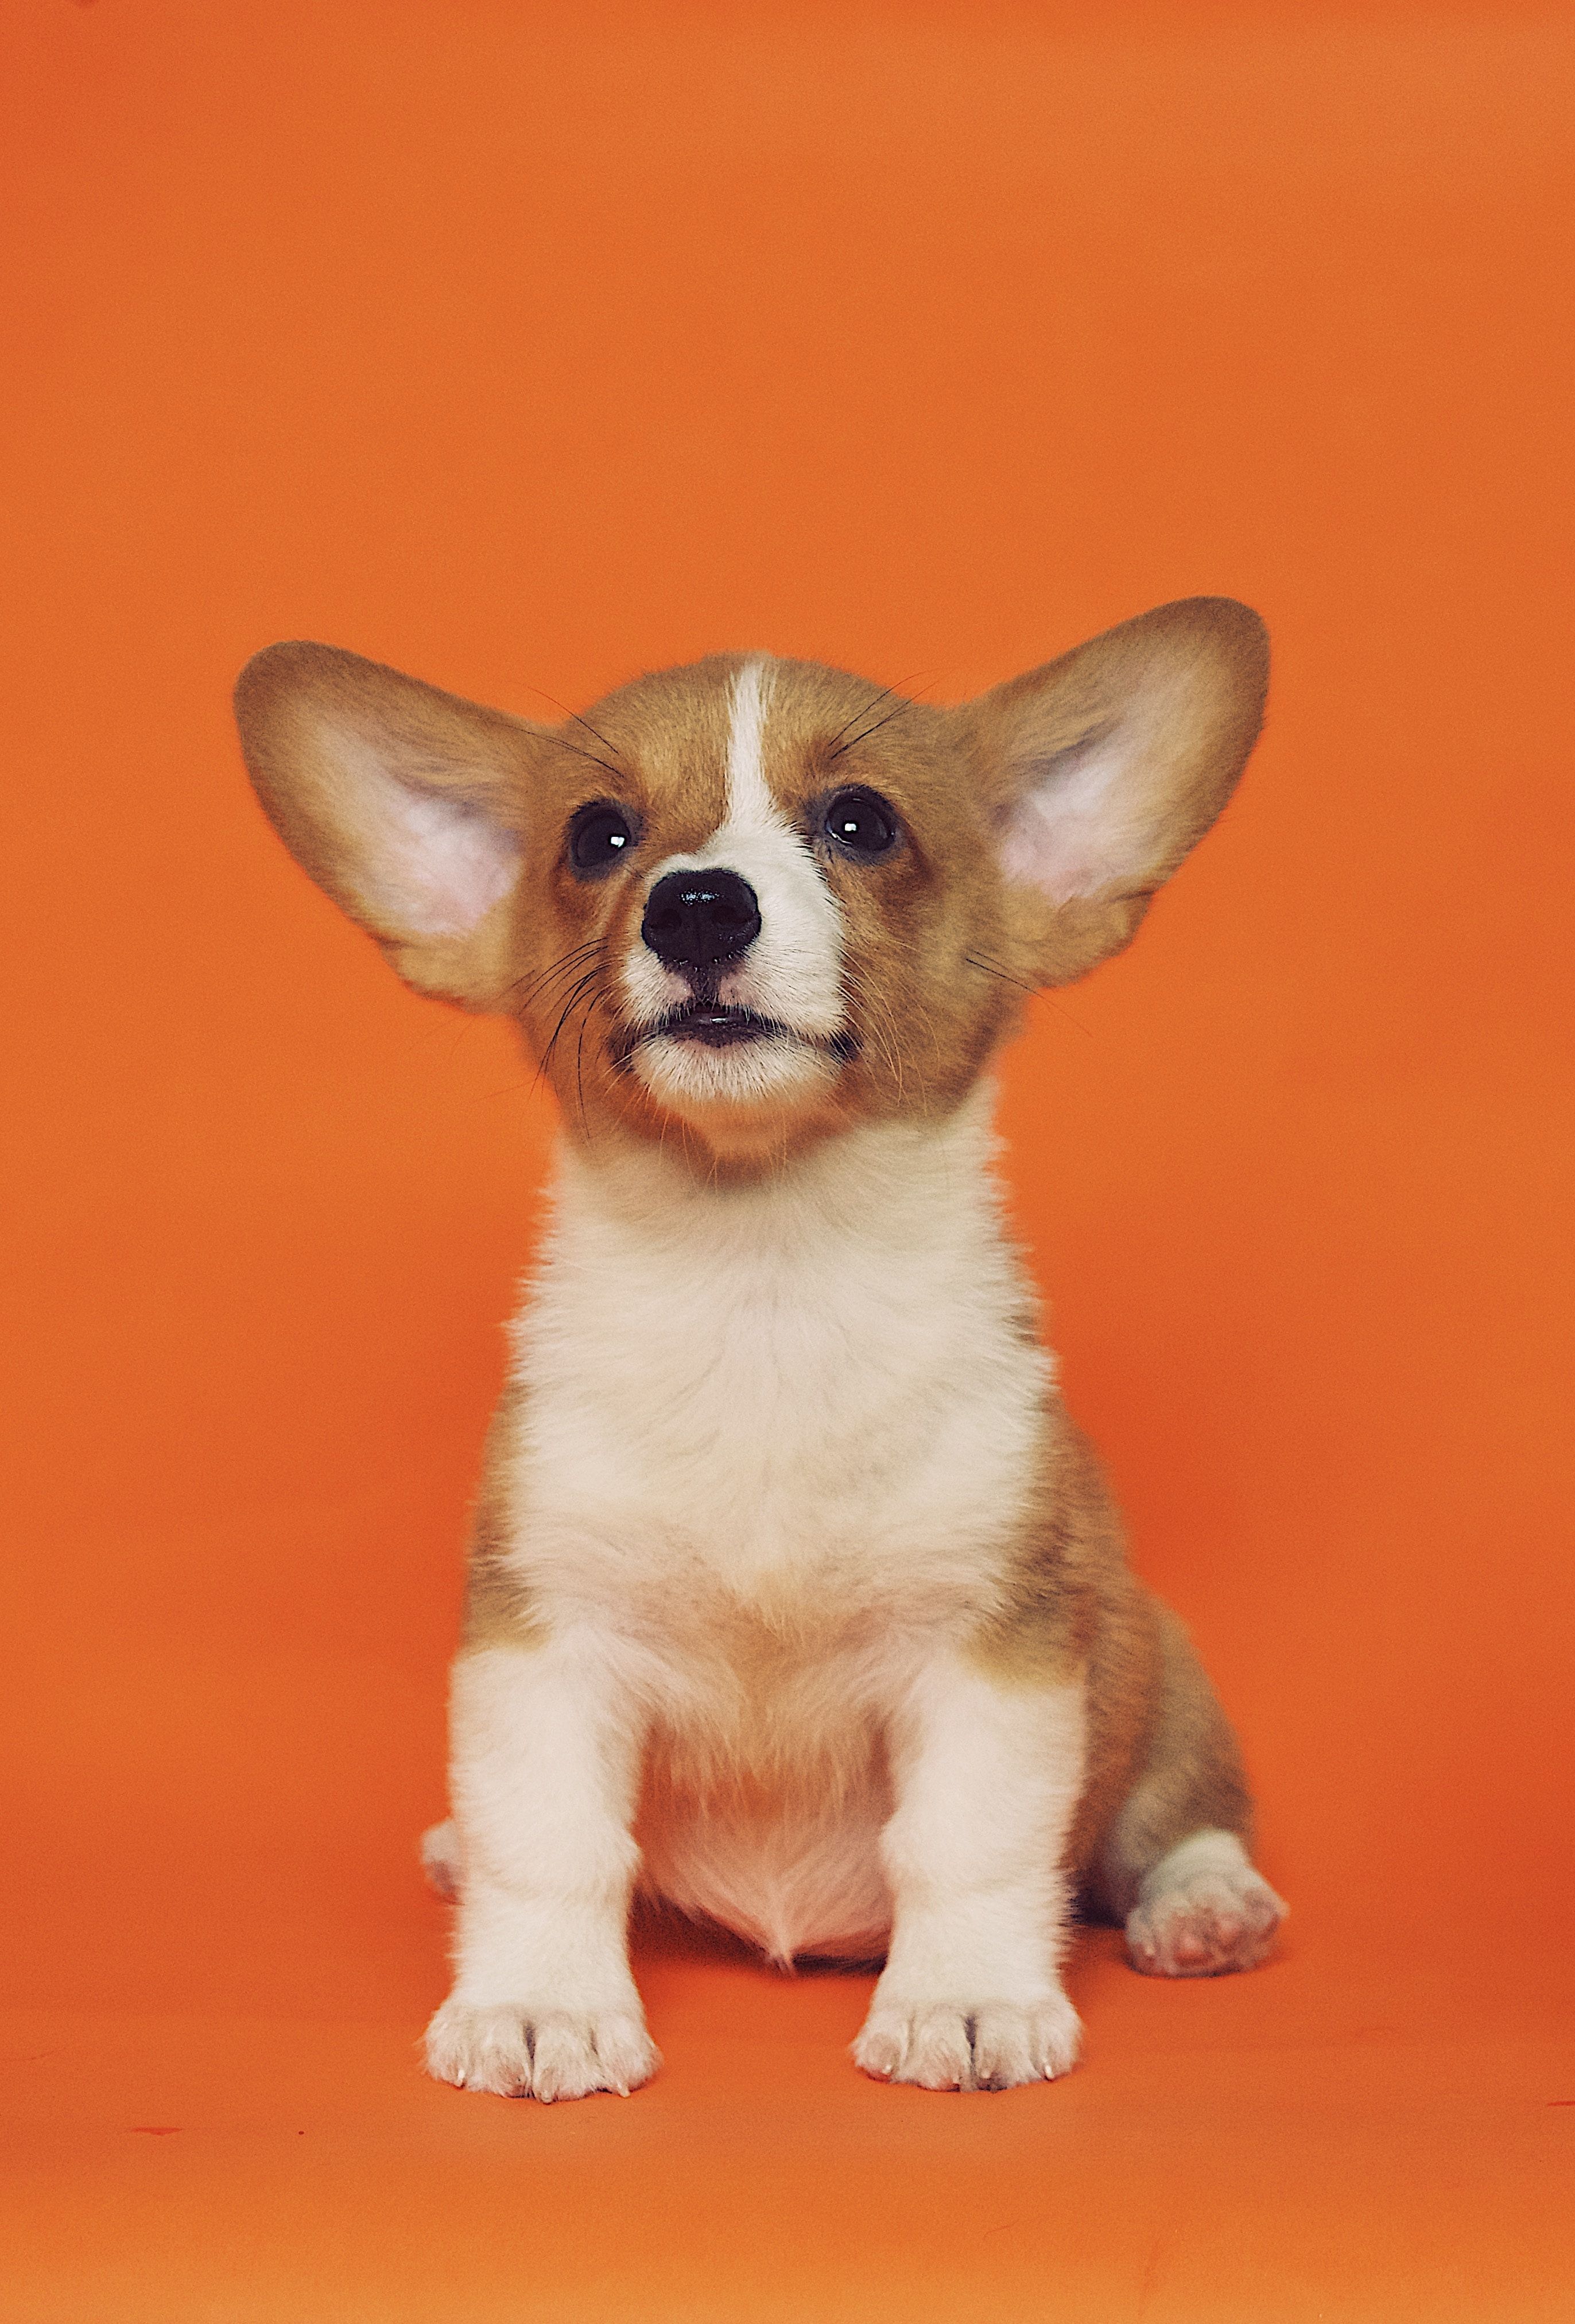 Cute Puppy Image For Welsh Corgi Wallpaper Download